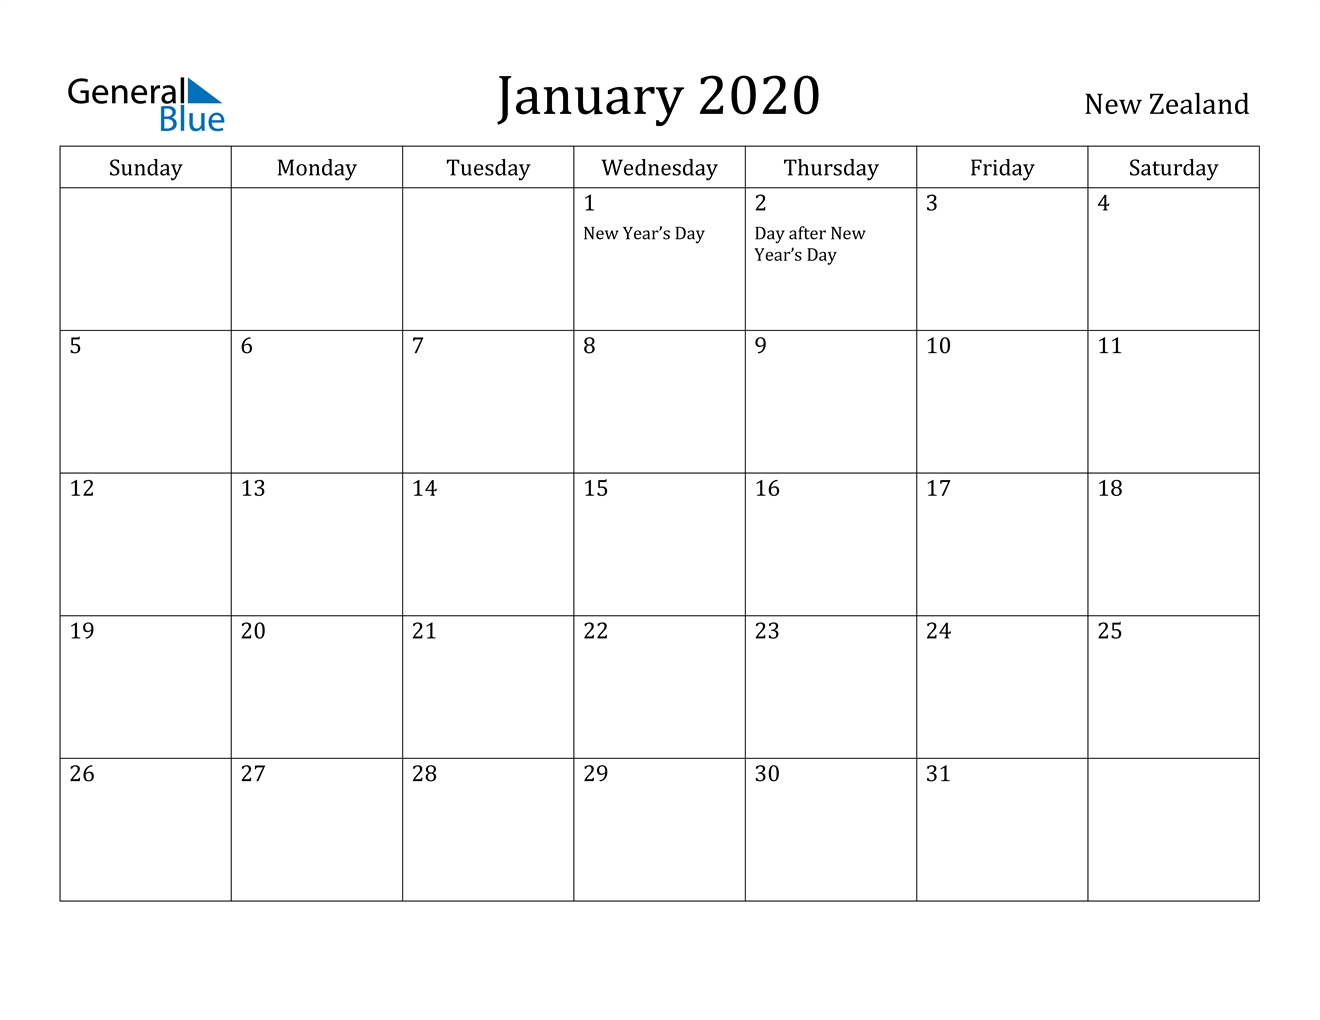 January 2020 Calendar - New Zealand Incredible January 2020 Calendar Nz